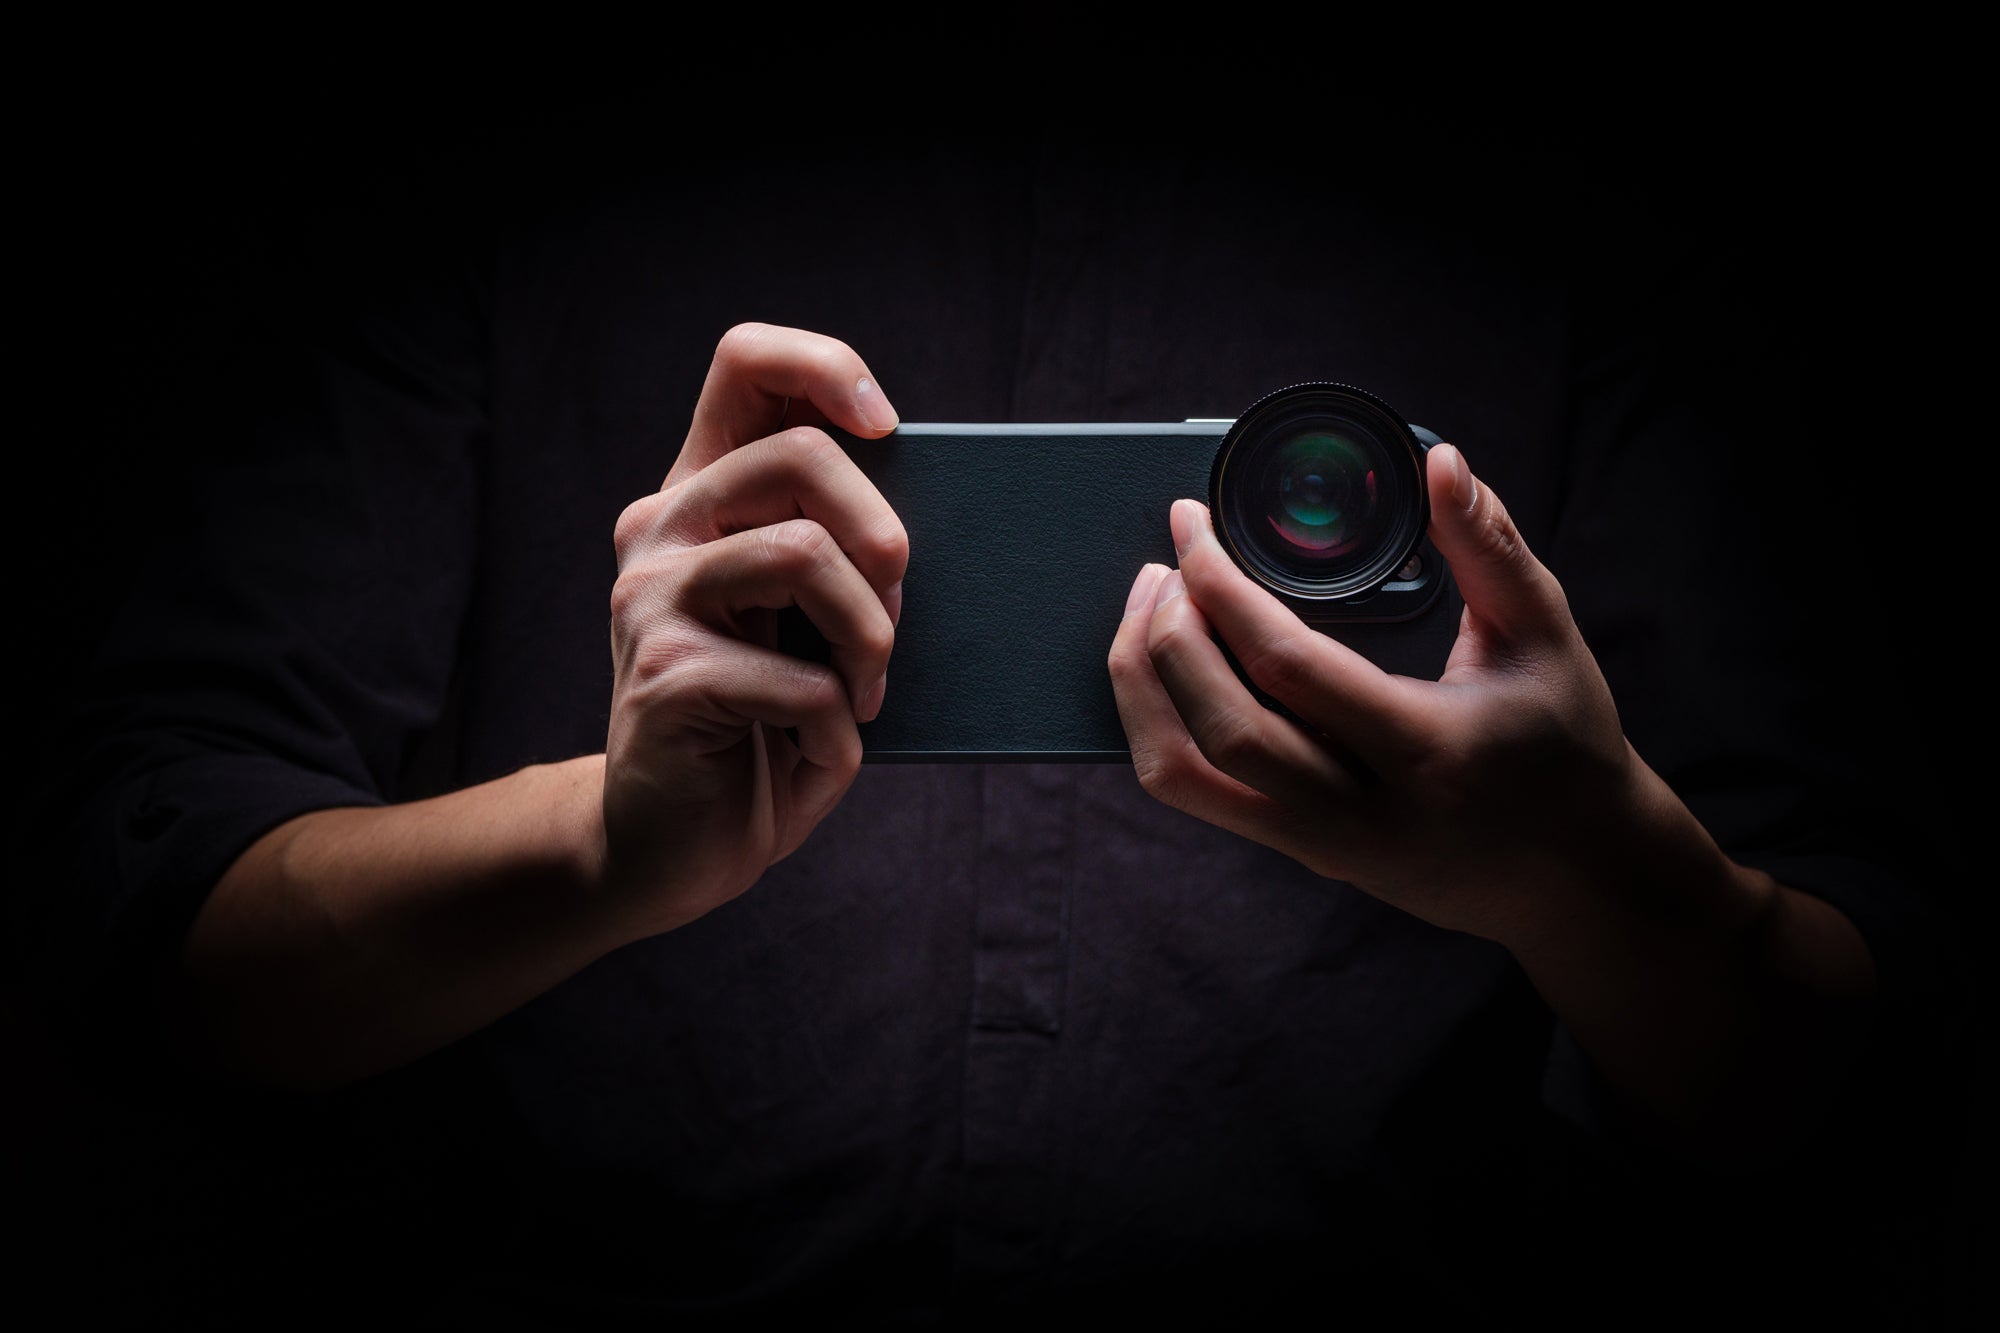 ShiftCam is running a Kickstarter for new smartphone lenses